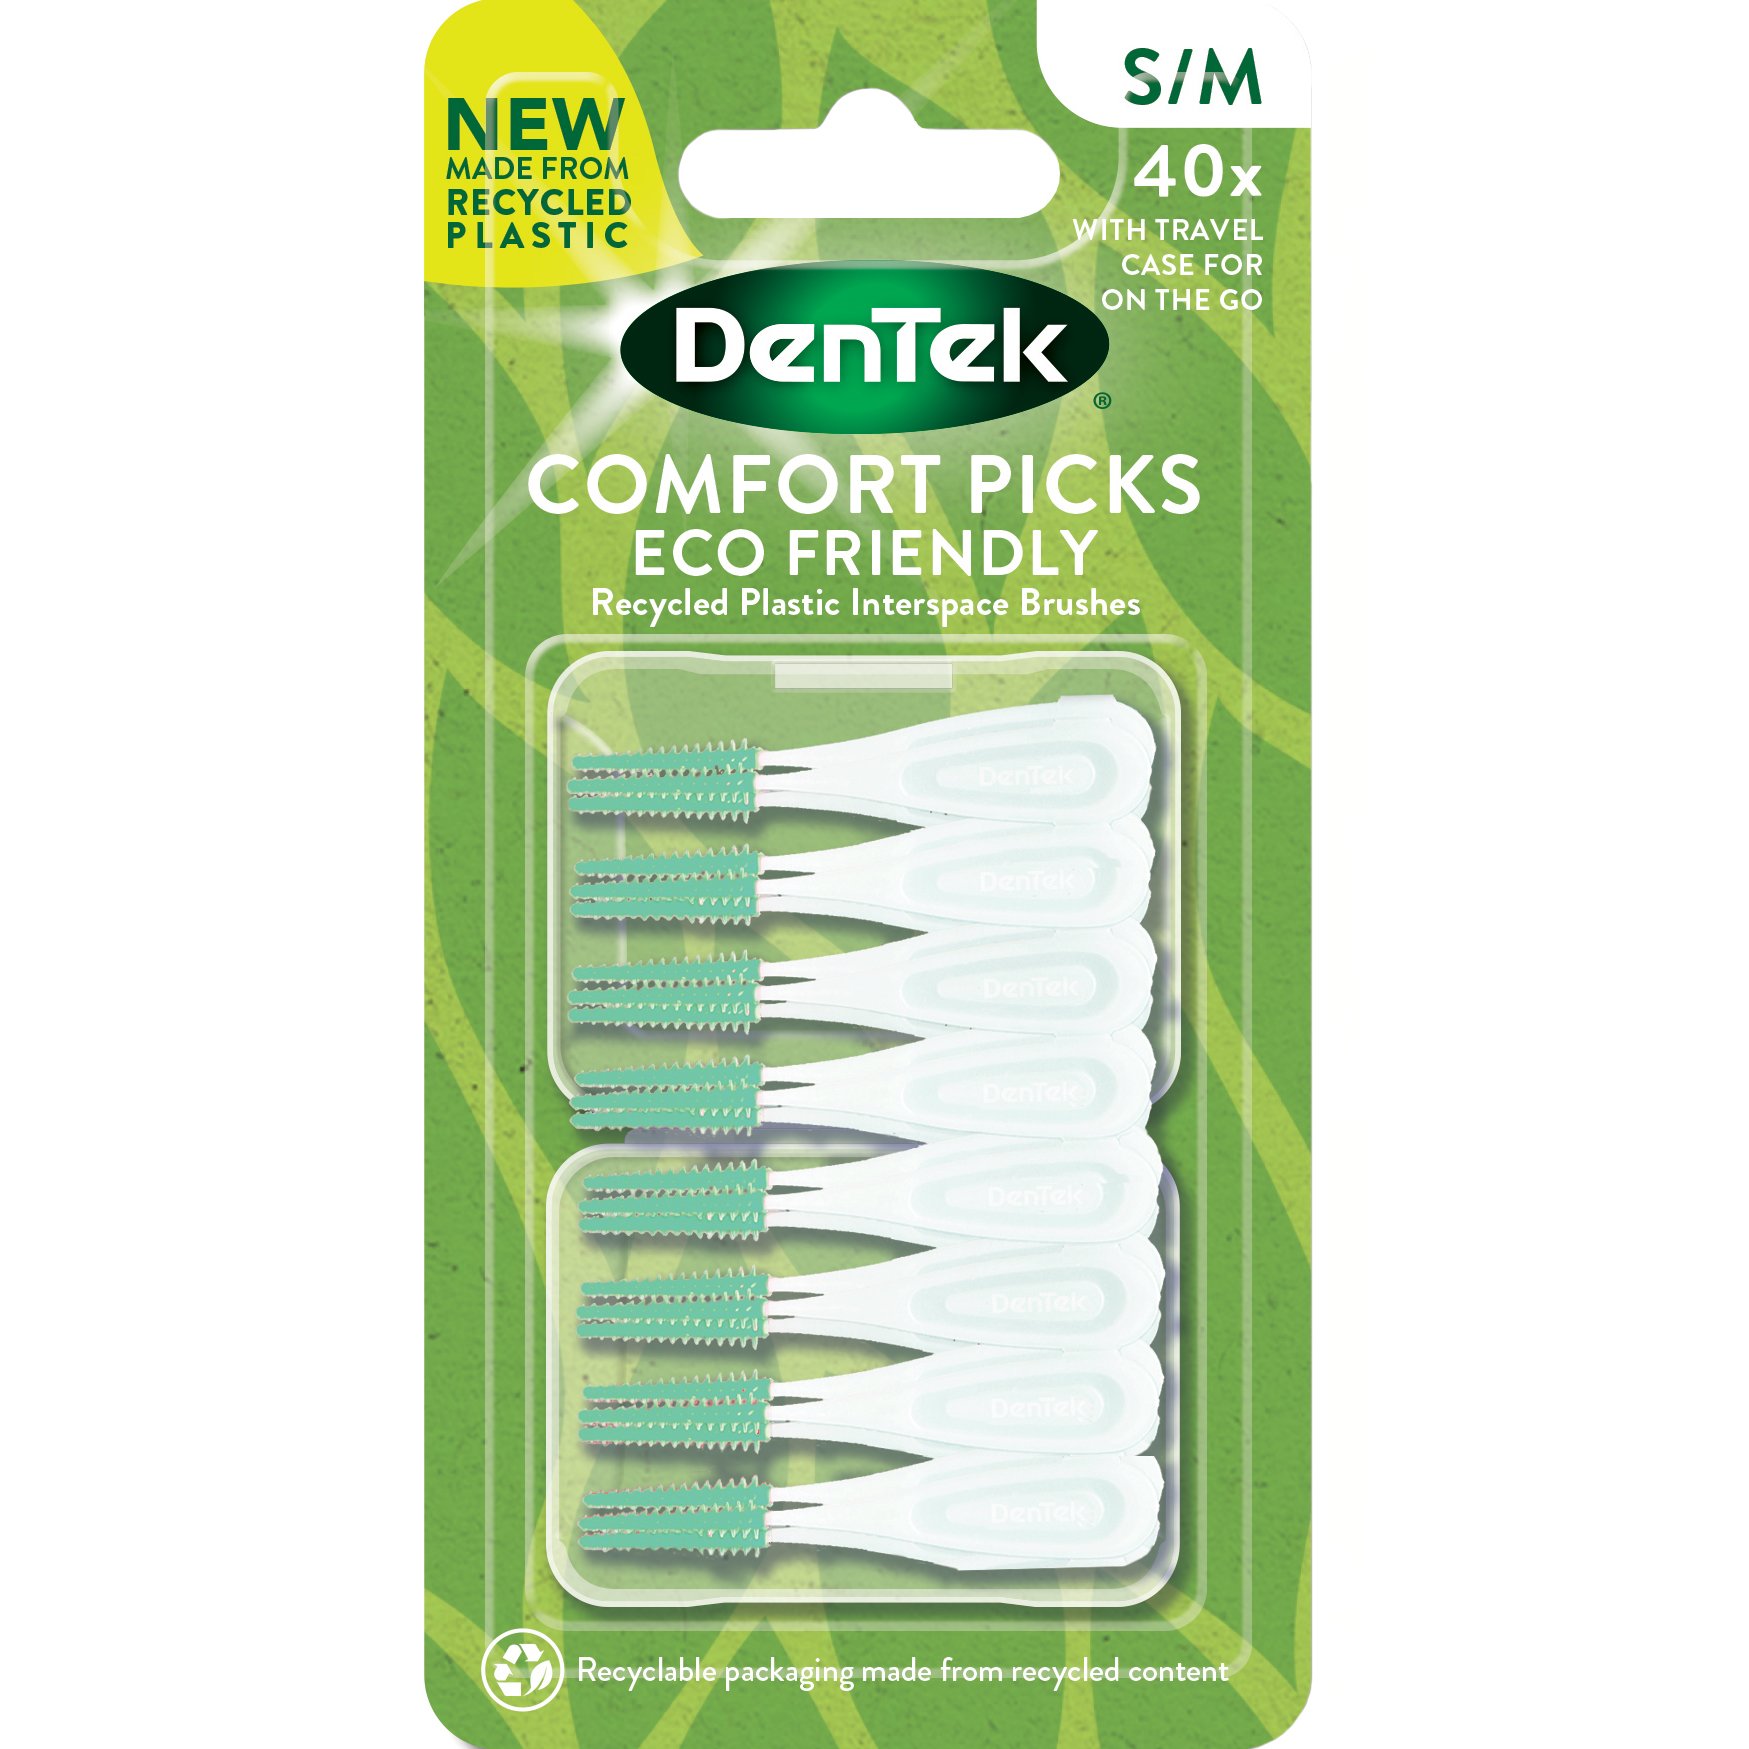 Dentek Comfort Picks Recycled Plastic Interspace Brushes Size S/M Μεσοδόντια Βουρτσάκια από Καουτσούκ 40 Τεμάχια